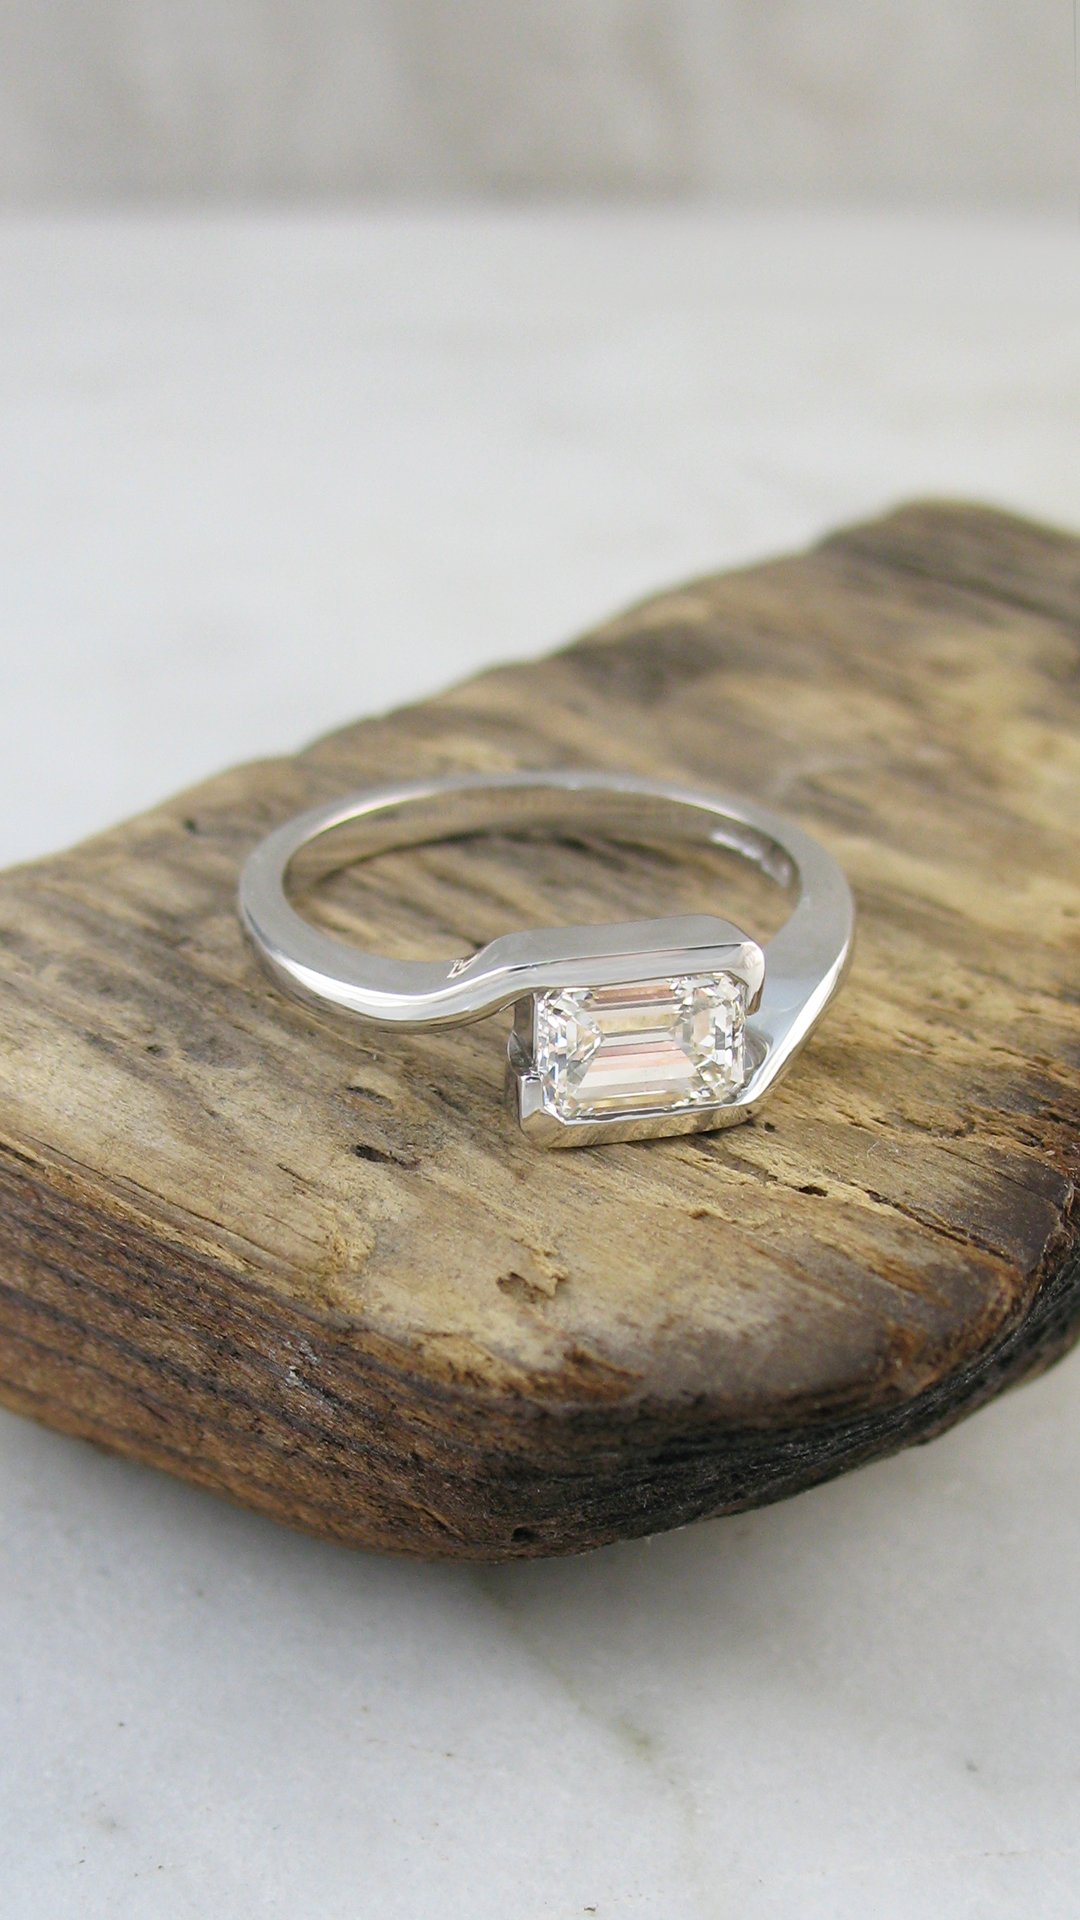 A modern style emerald cut diamond engagement ring